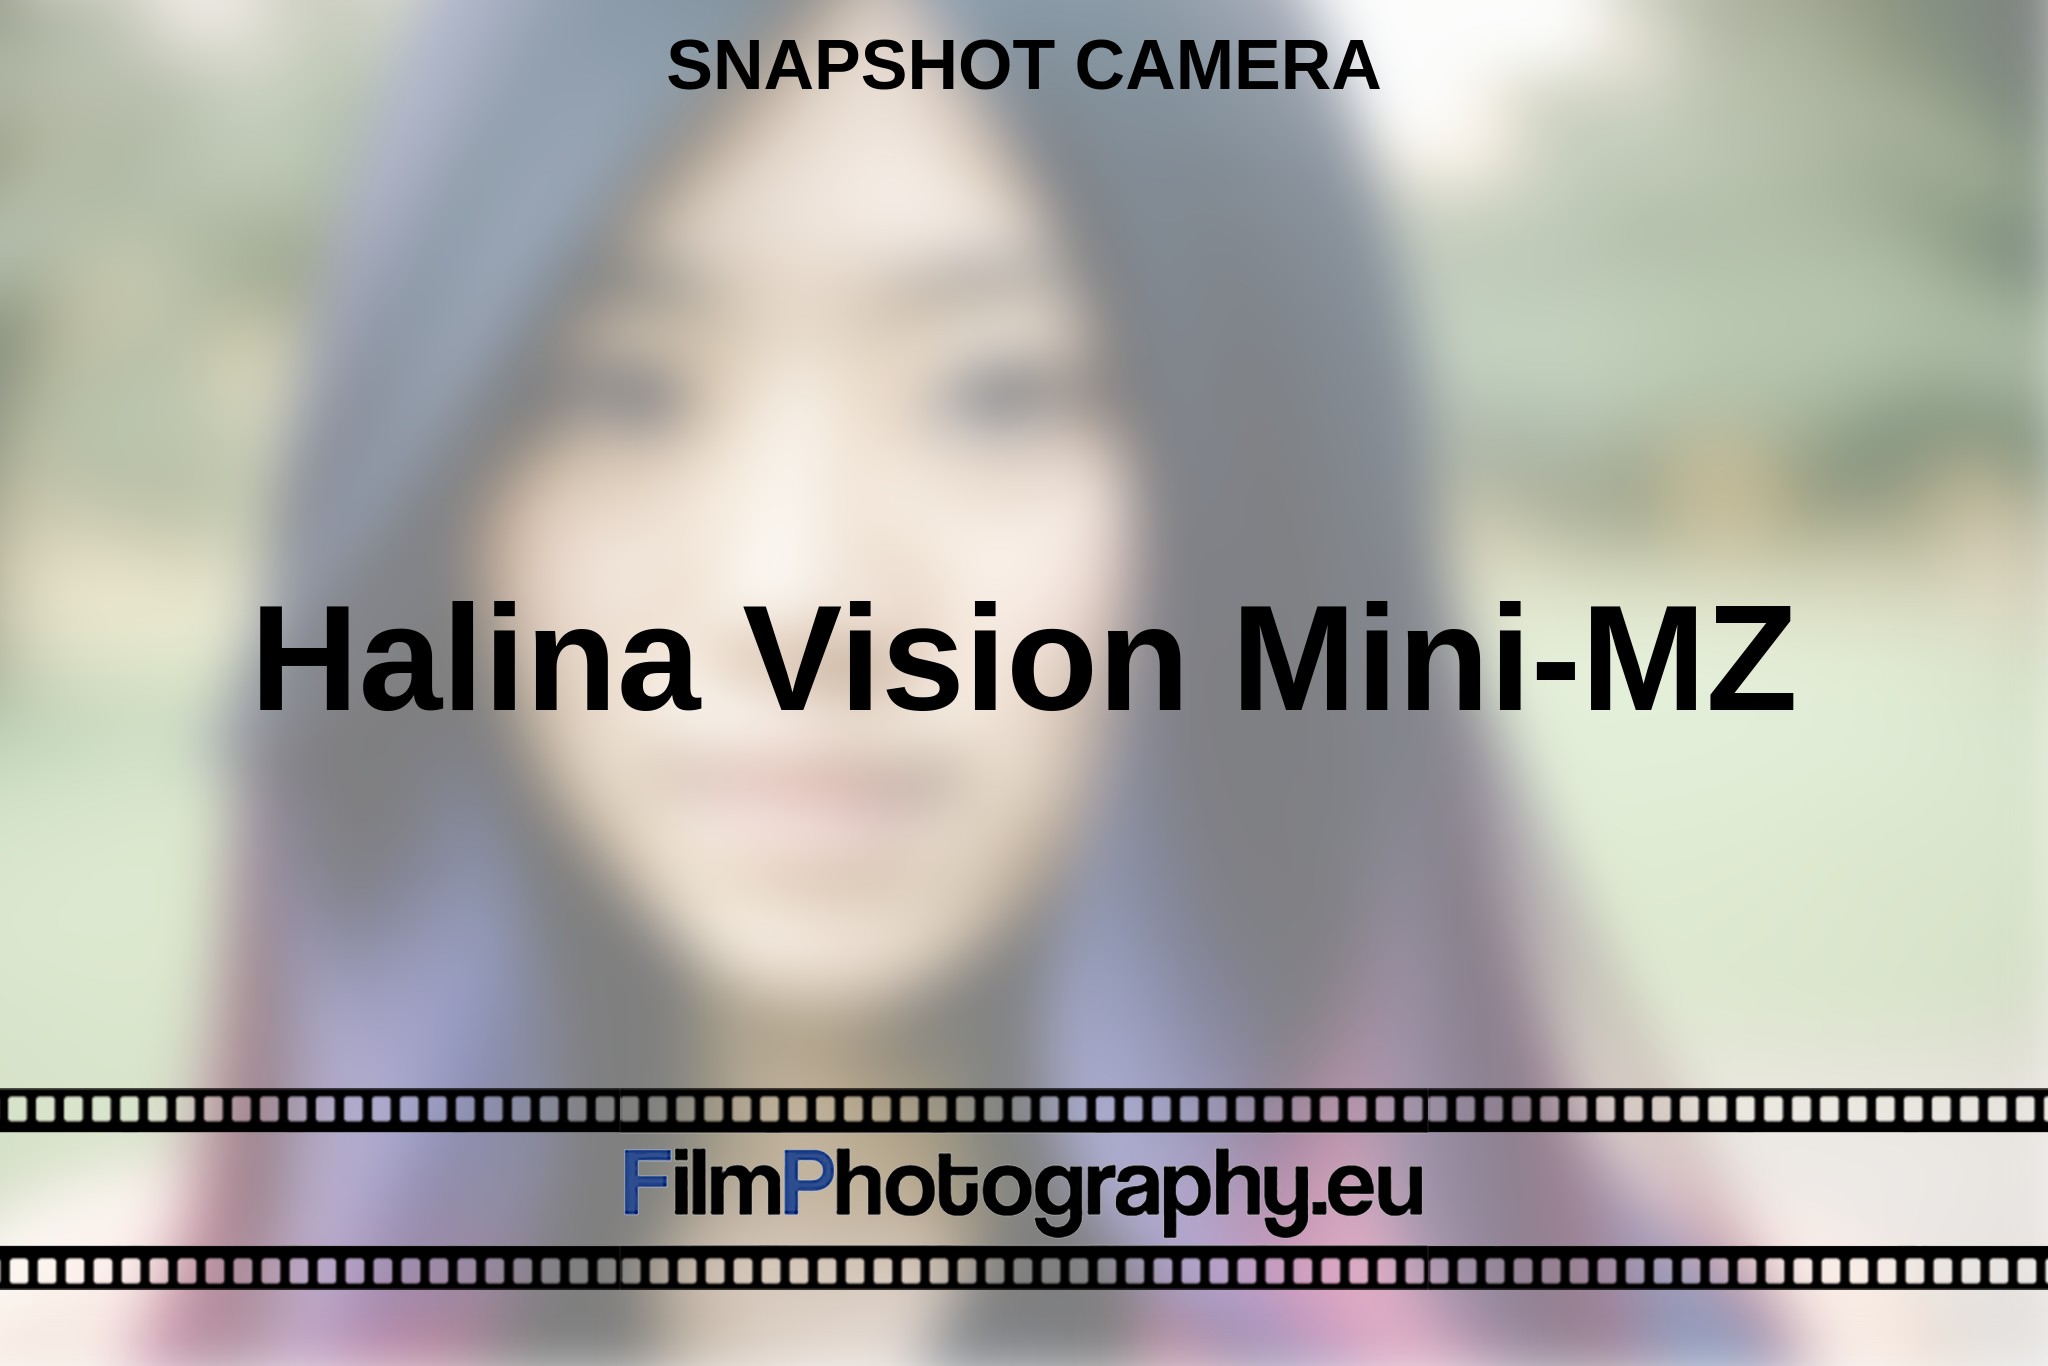 halina-vision-mini-mz-snapshot-camera-en-bnv.jpg